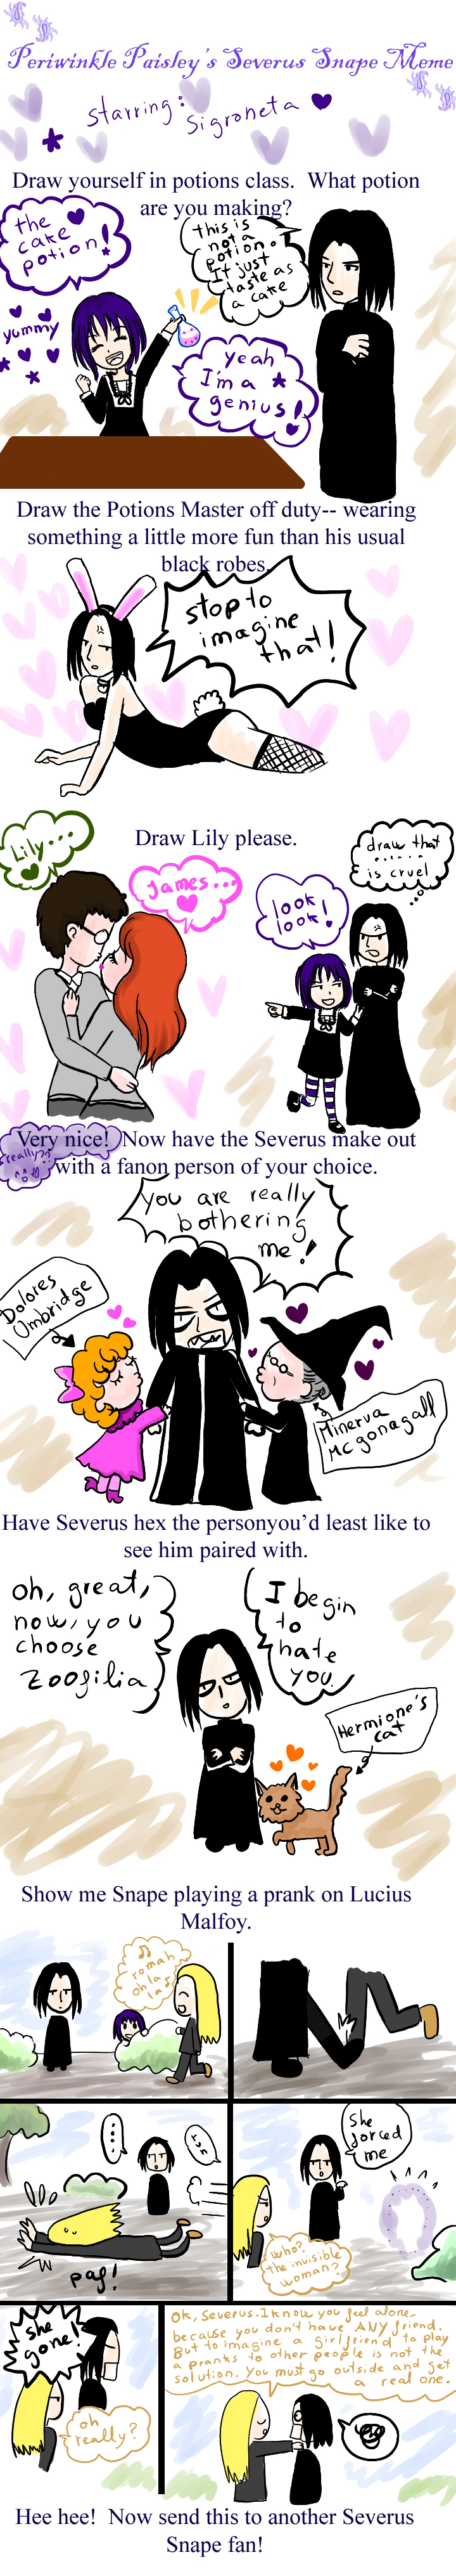 Severus Snape meme by sigroneta on DeviantArt